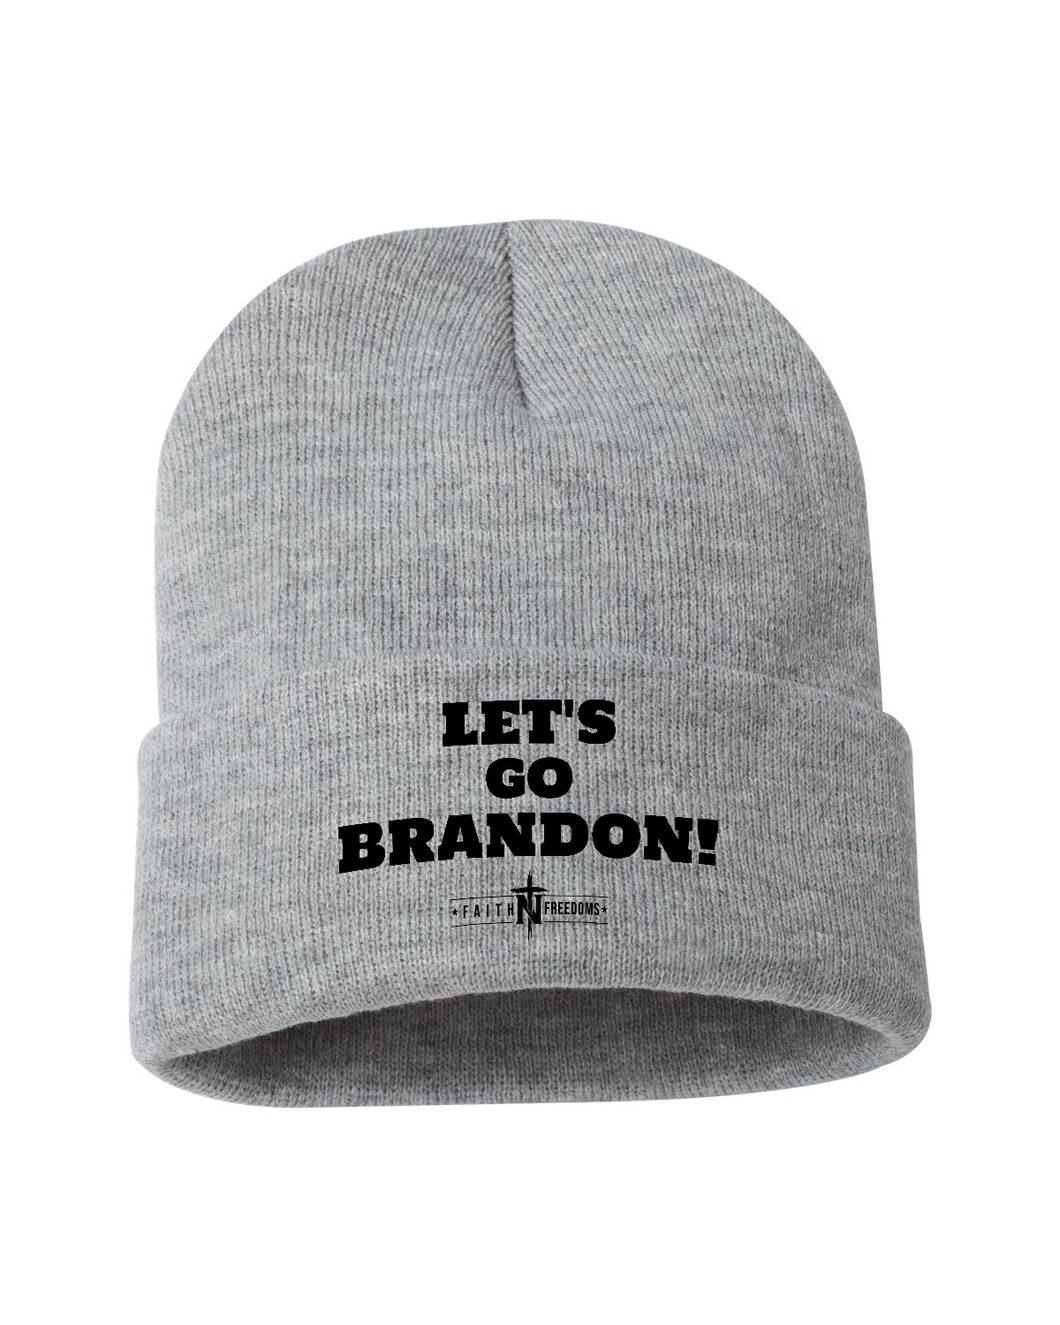 Lets Go Brandon Knit Beanie